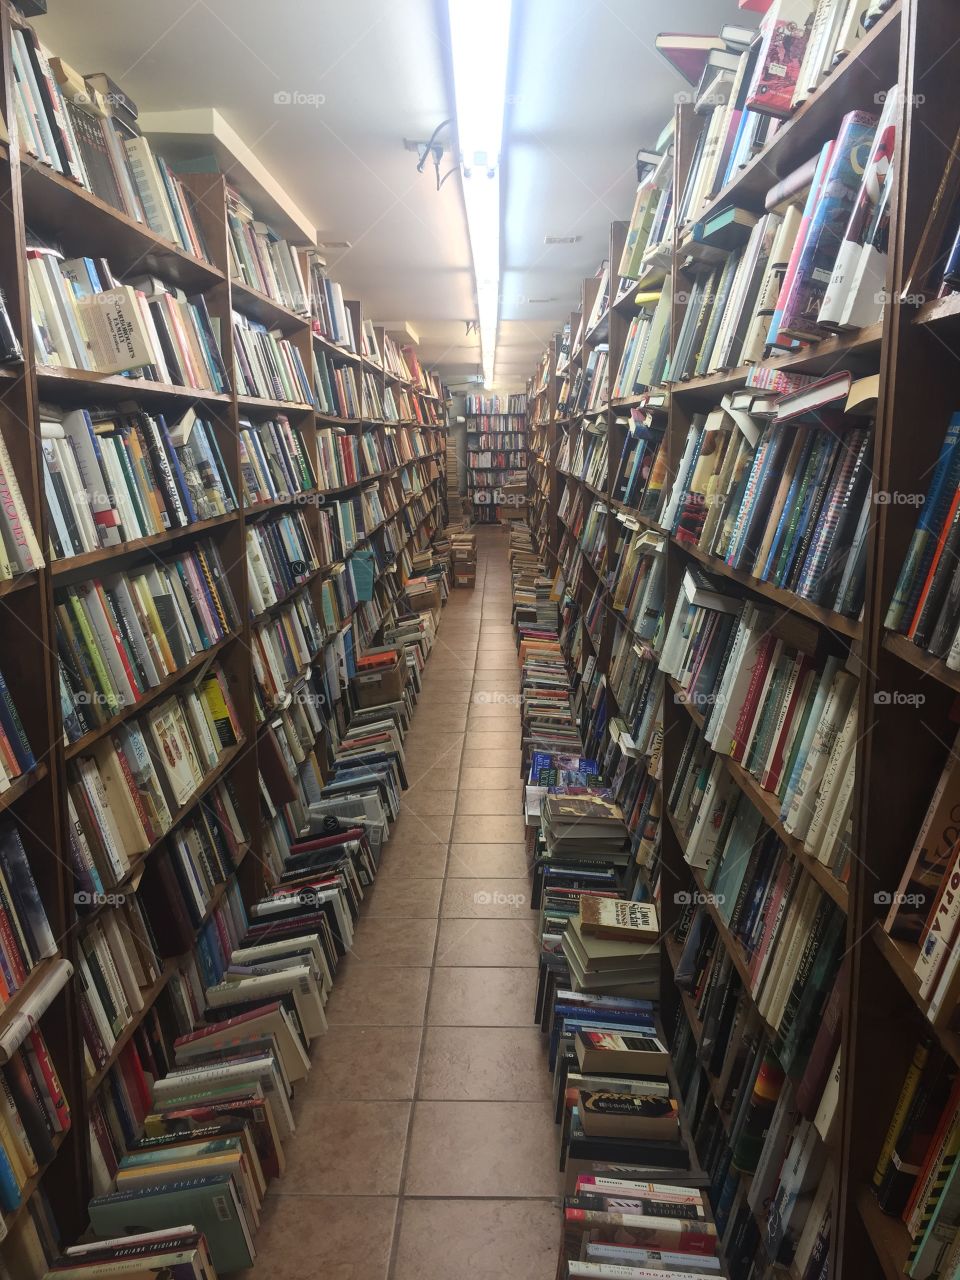 Von's Bookstore shelves